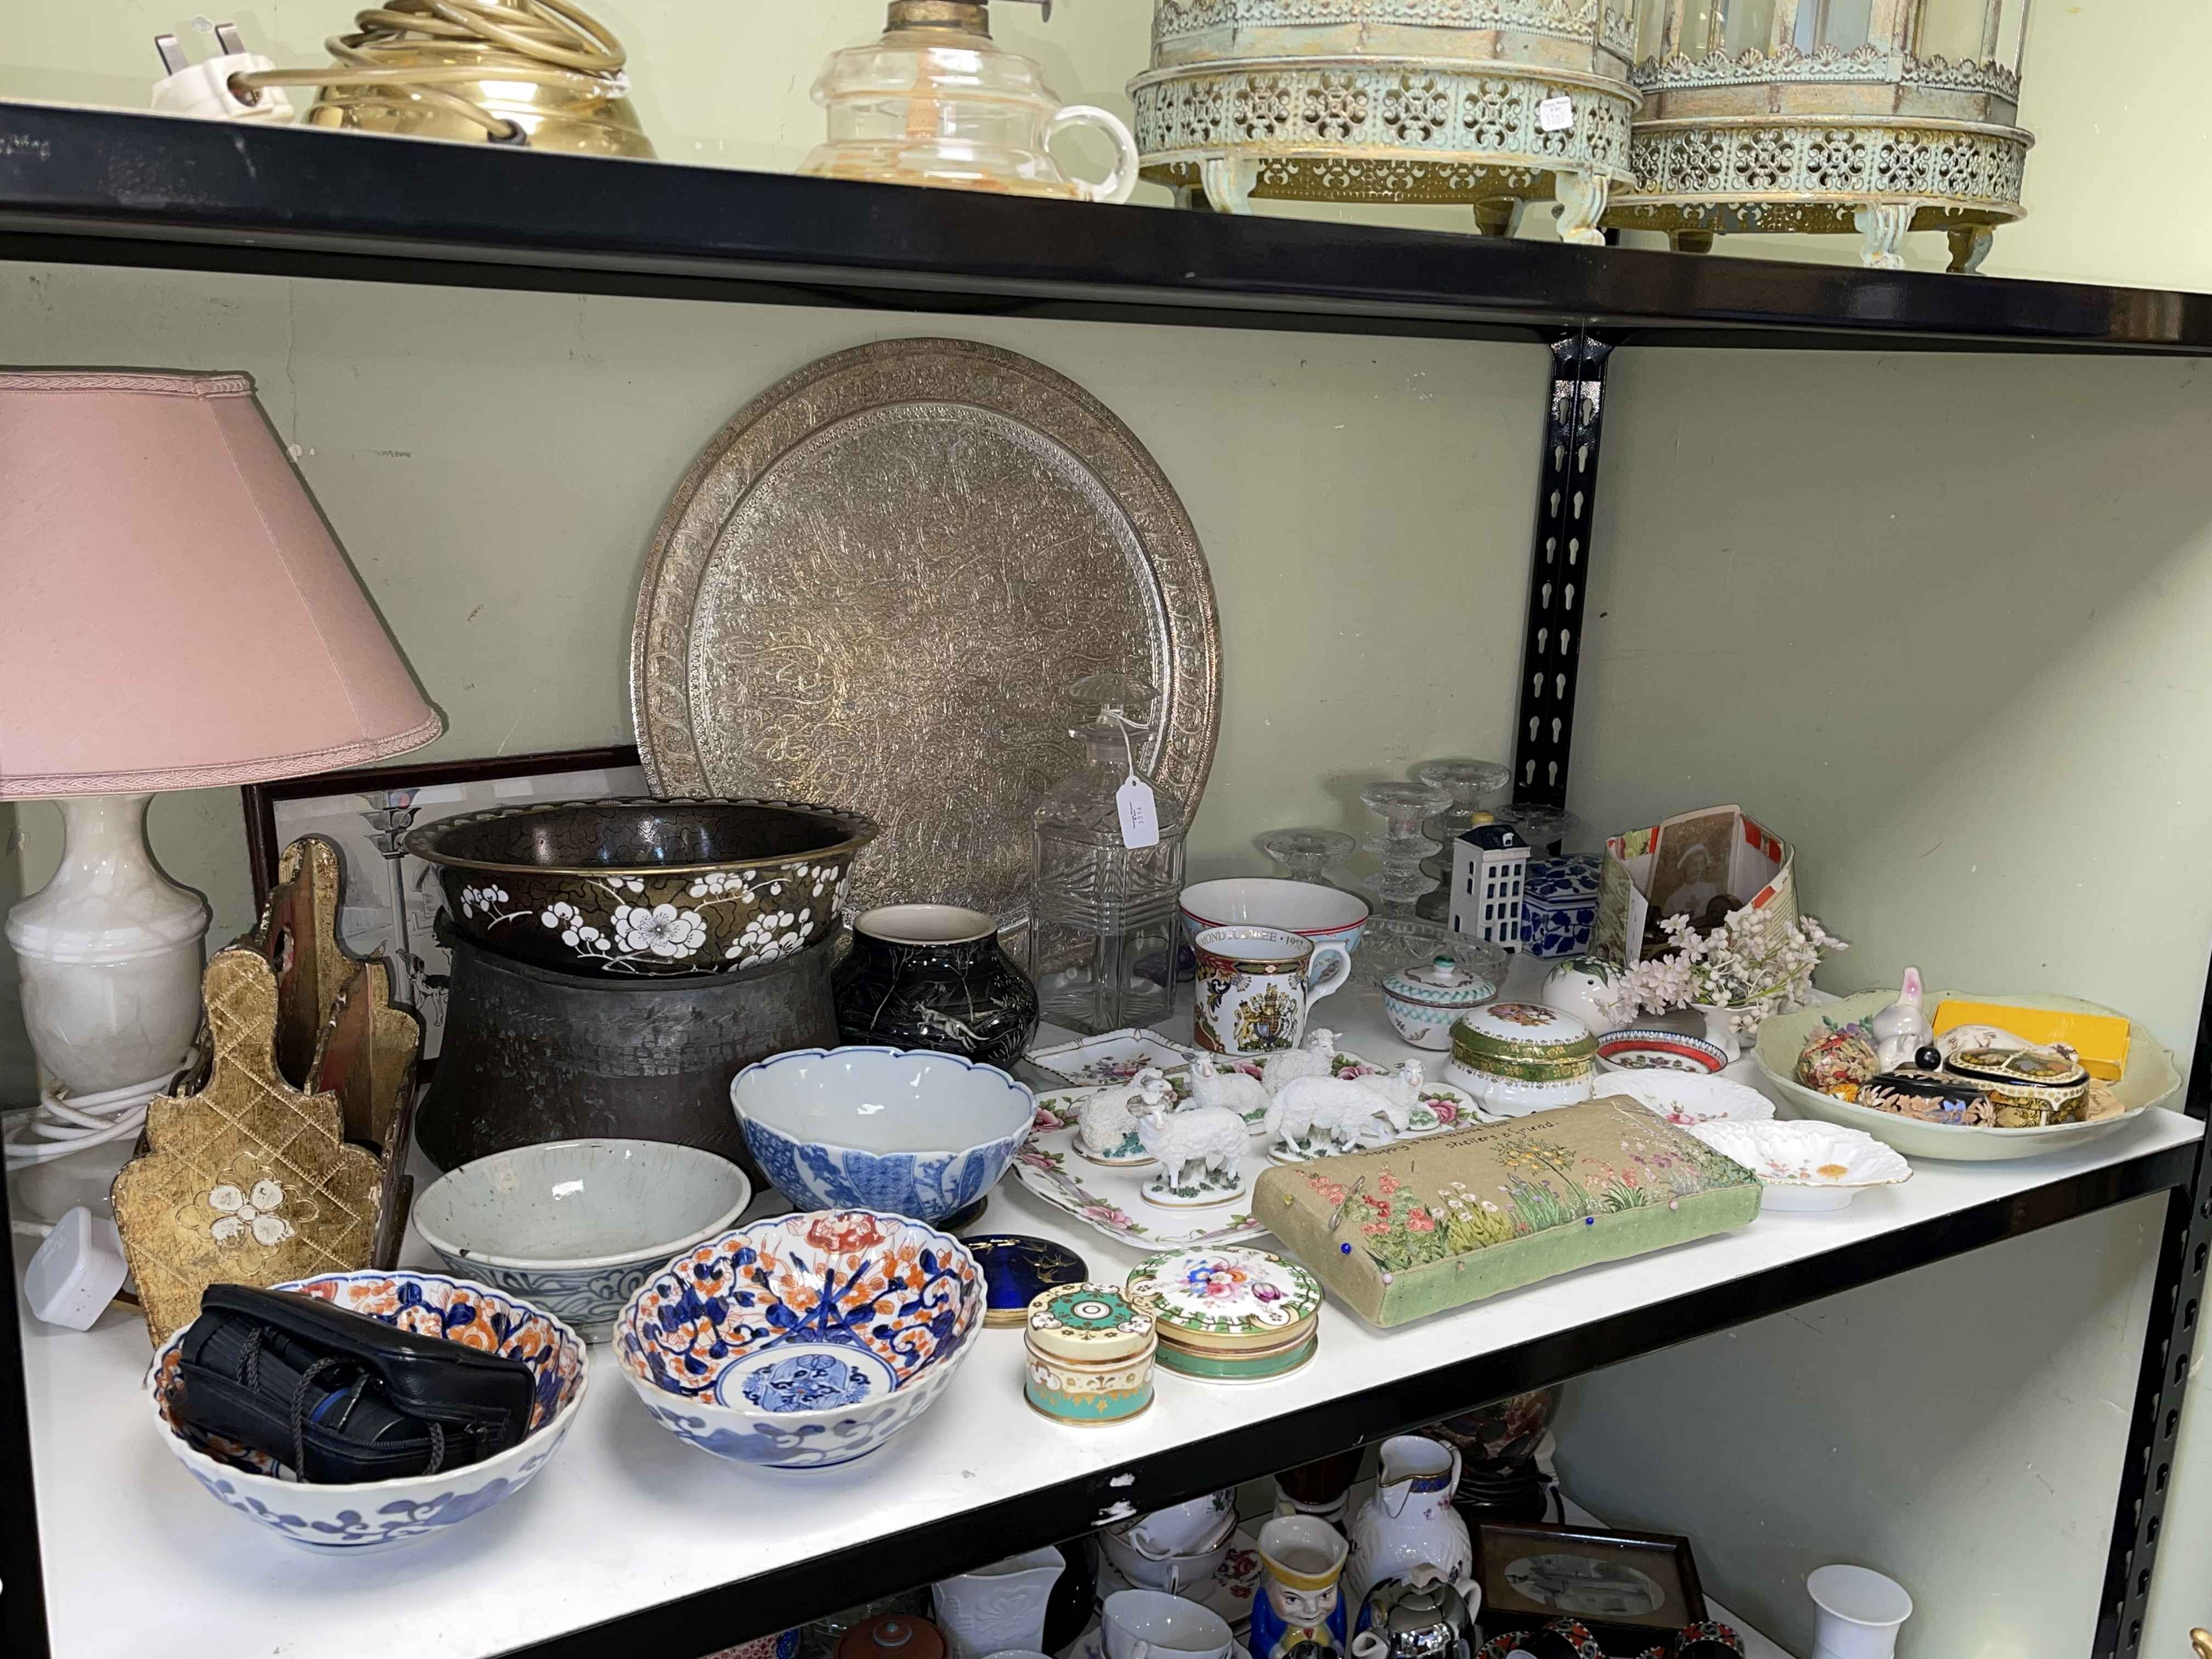 Collection of Oriental wares, sheep figurines, papier-mache, decanter, etc.